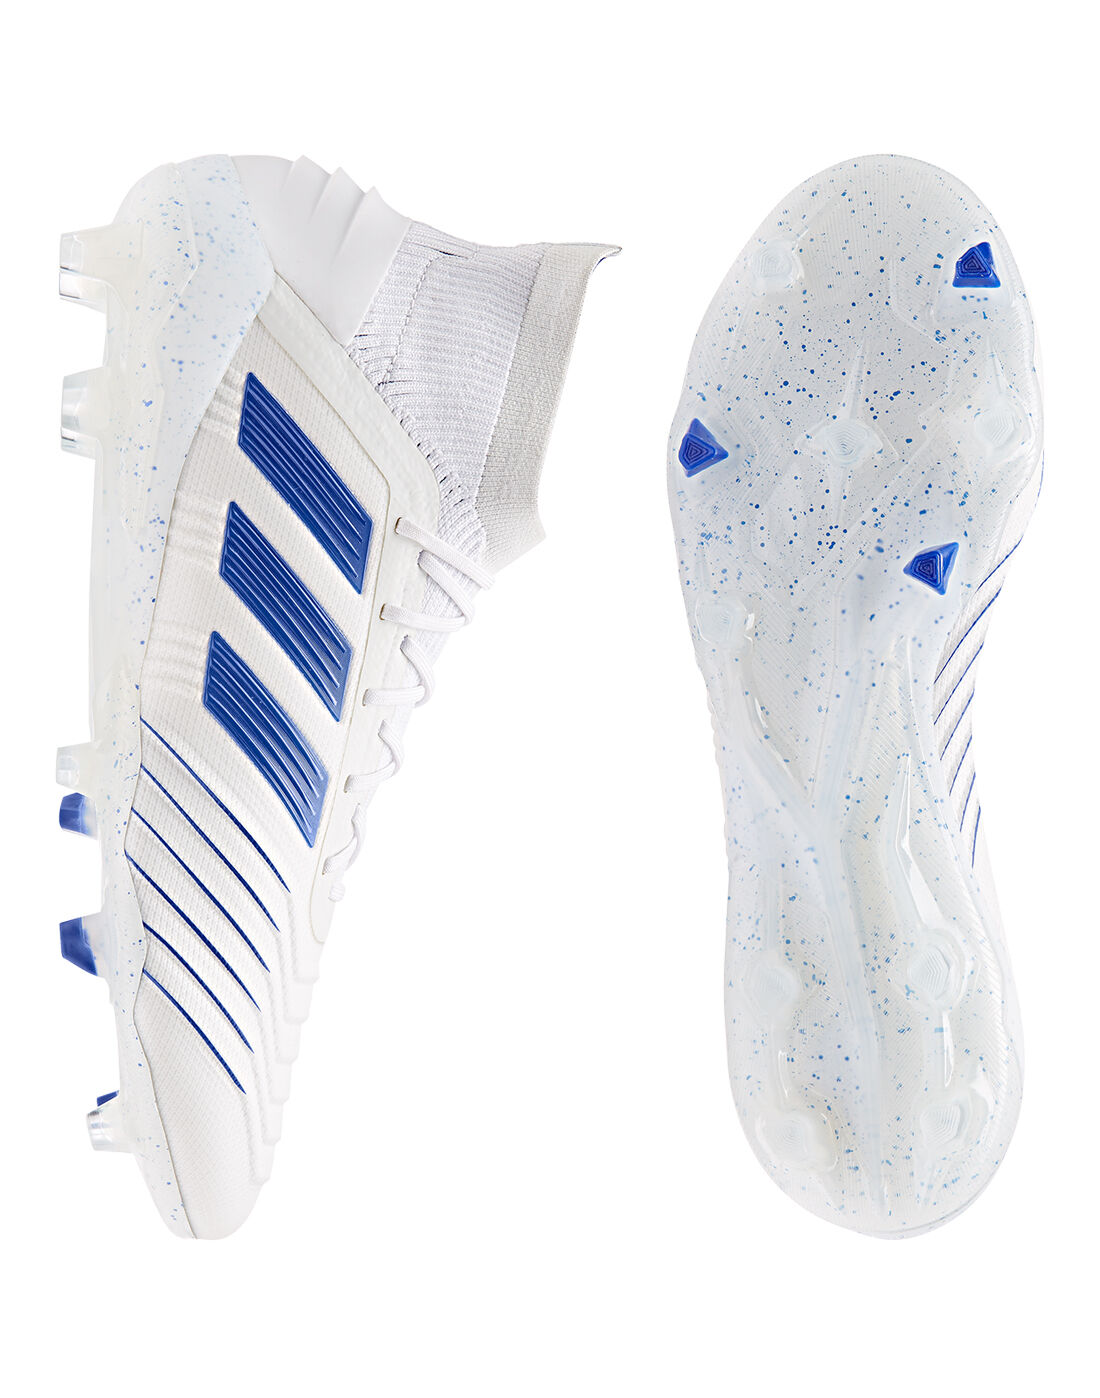 adidas predator 19.1 white blue